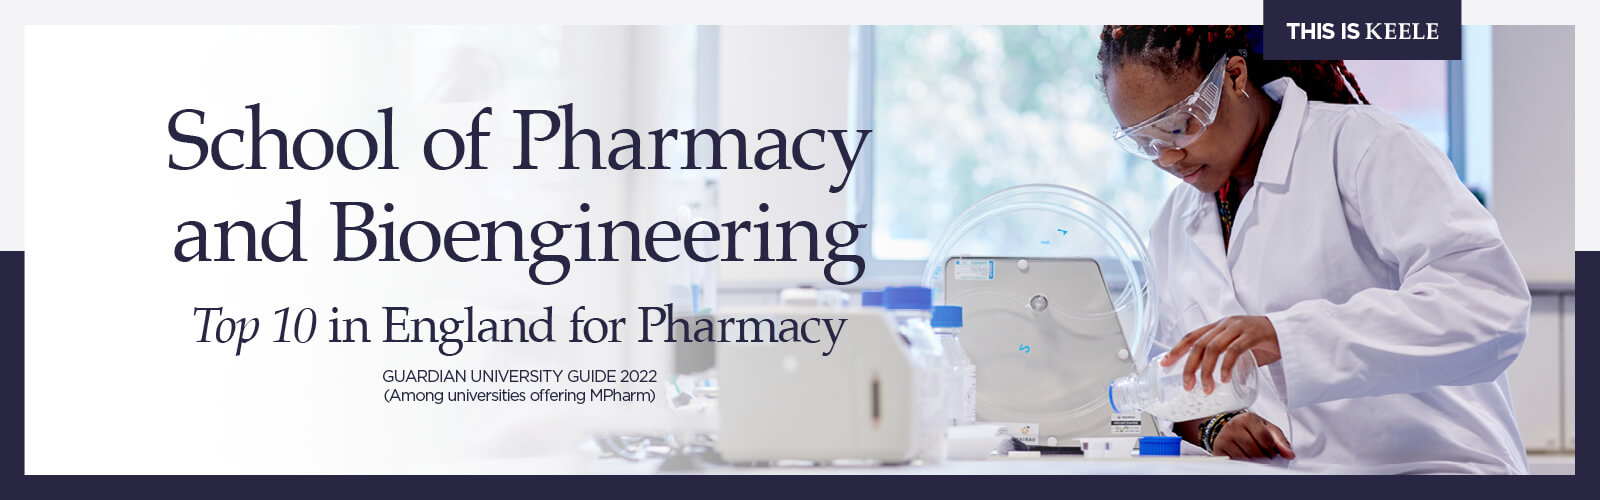 School of Pharmacy and Bioengineering banner